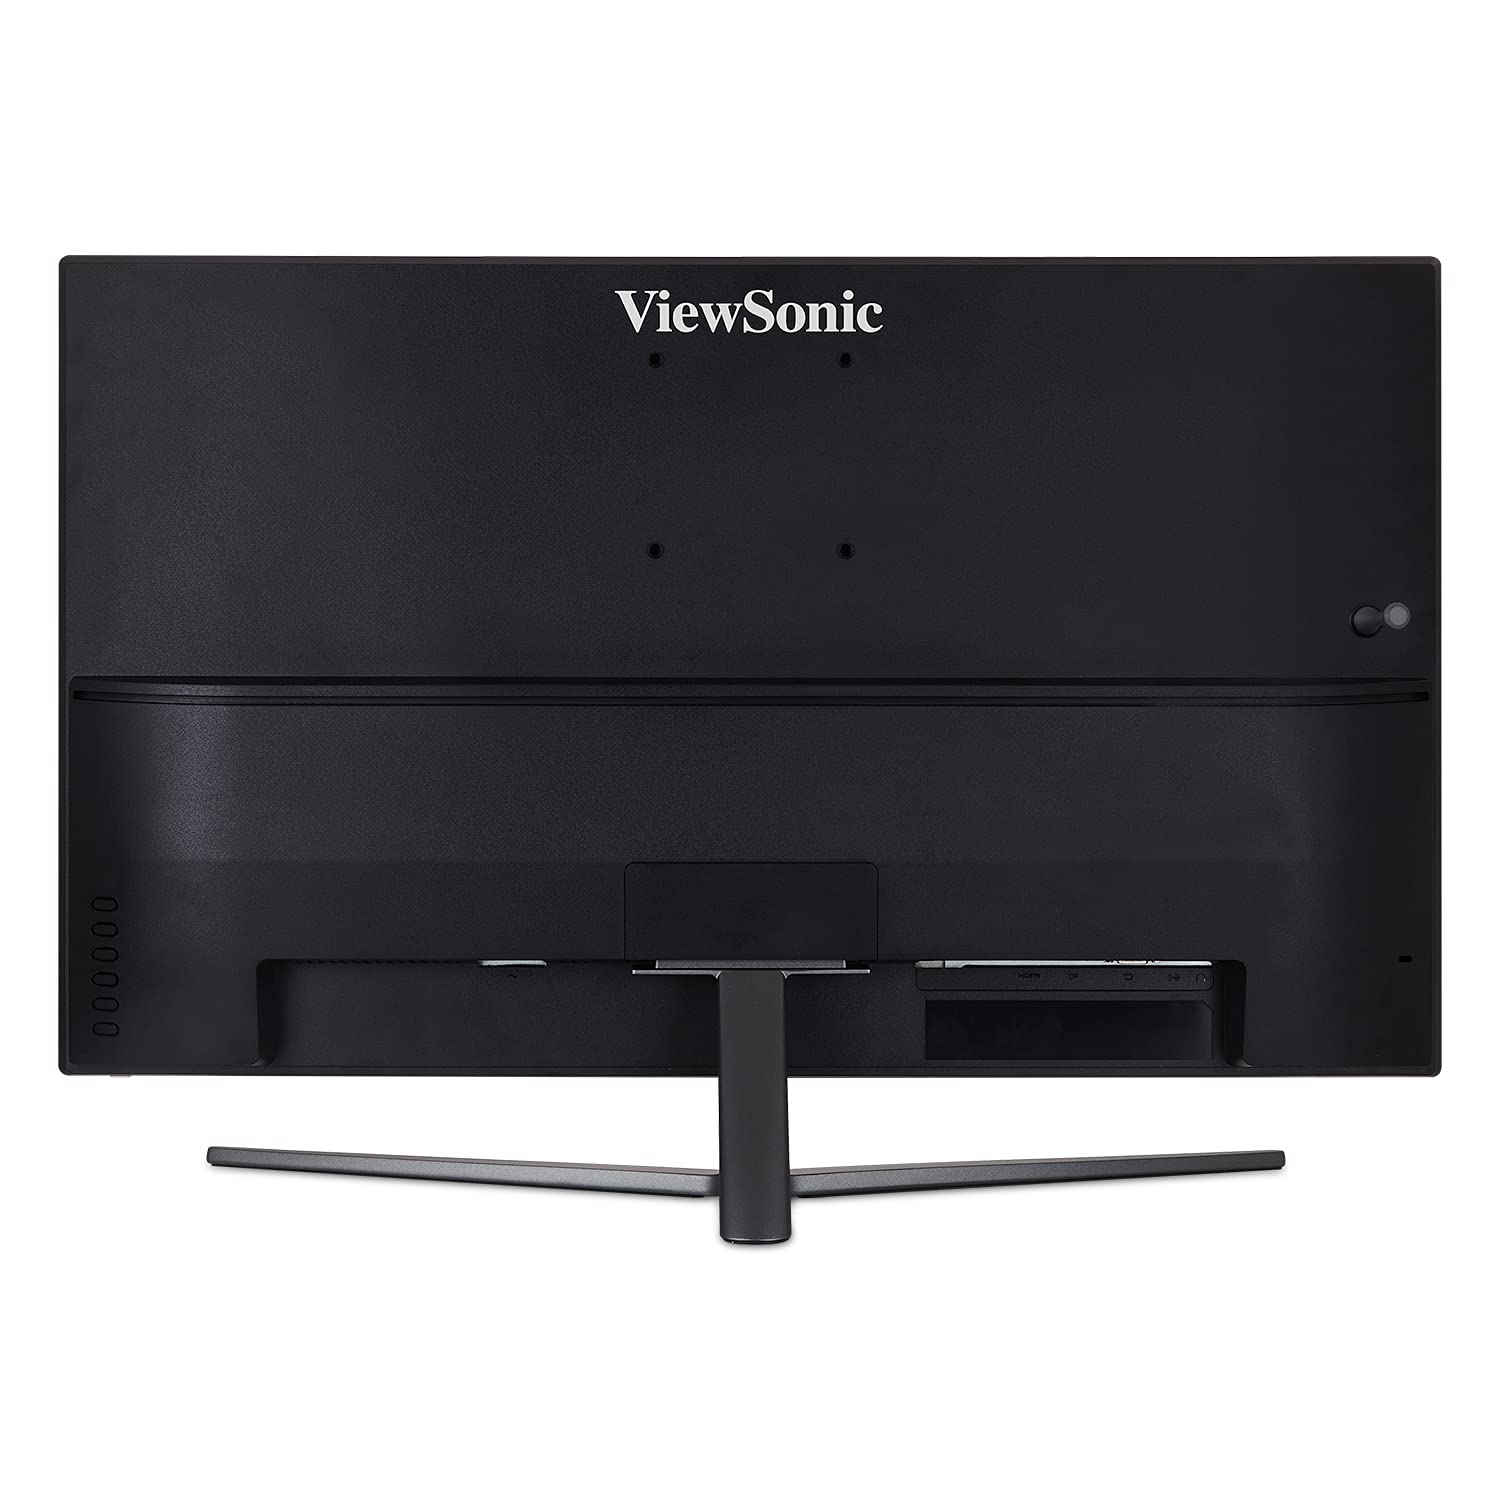 ViewSonic VX3211-2K-MHD 32 Inch IPS WQHD 1440p Monitor with 99% sRGB Color Coverage HDMI VGA and DisplayPort, Black